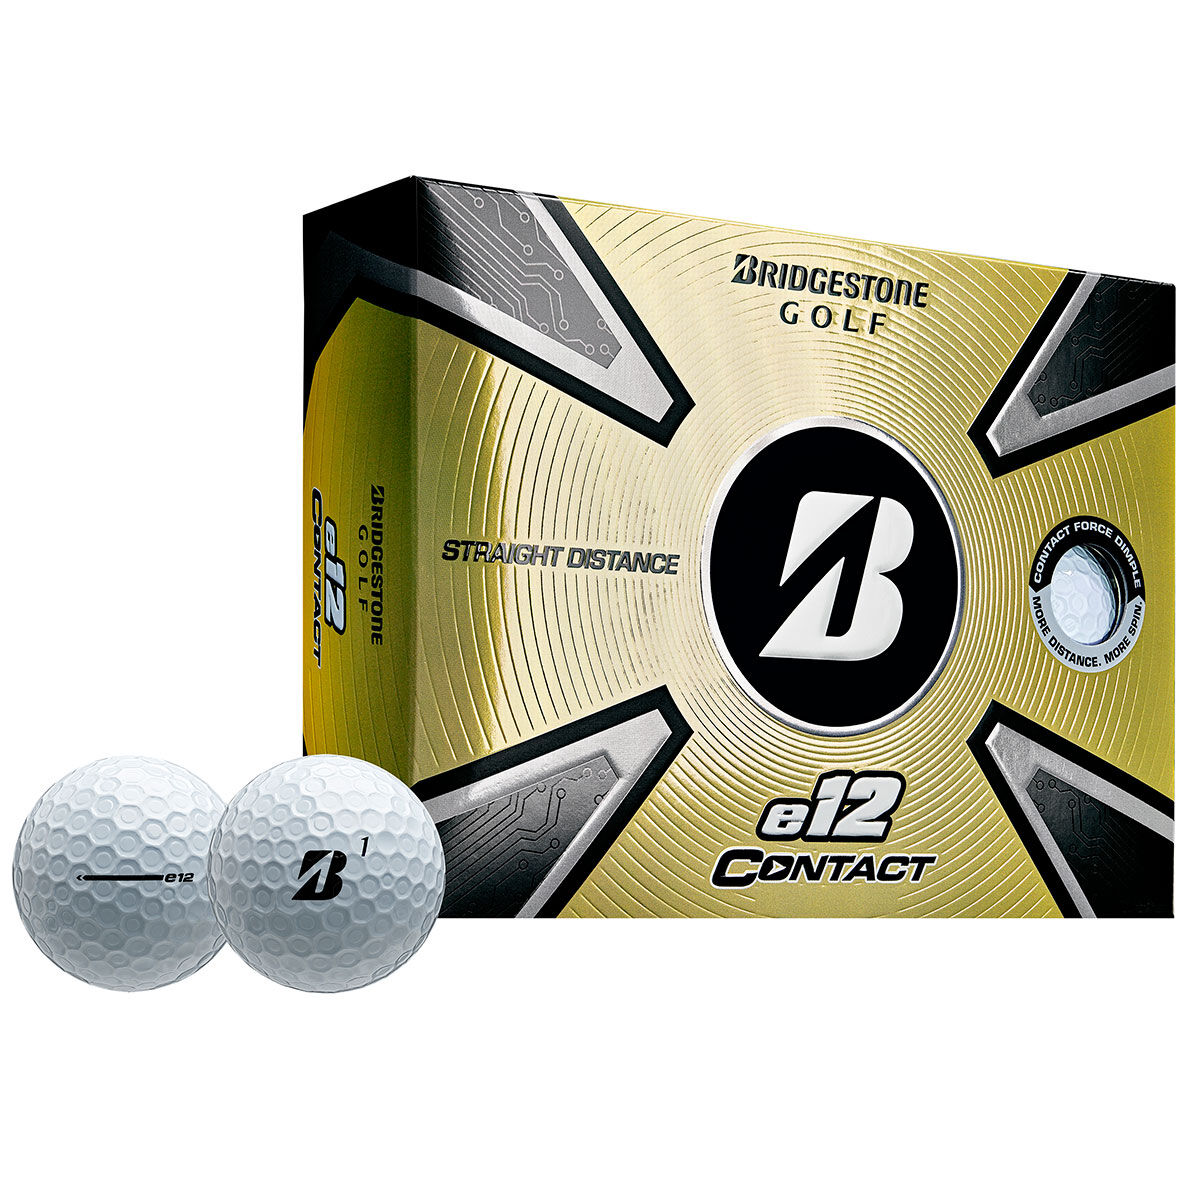 Bridgestone Golf White Dimple e12 Contact 12 Golf Ball Pack | American Golf, One Size